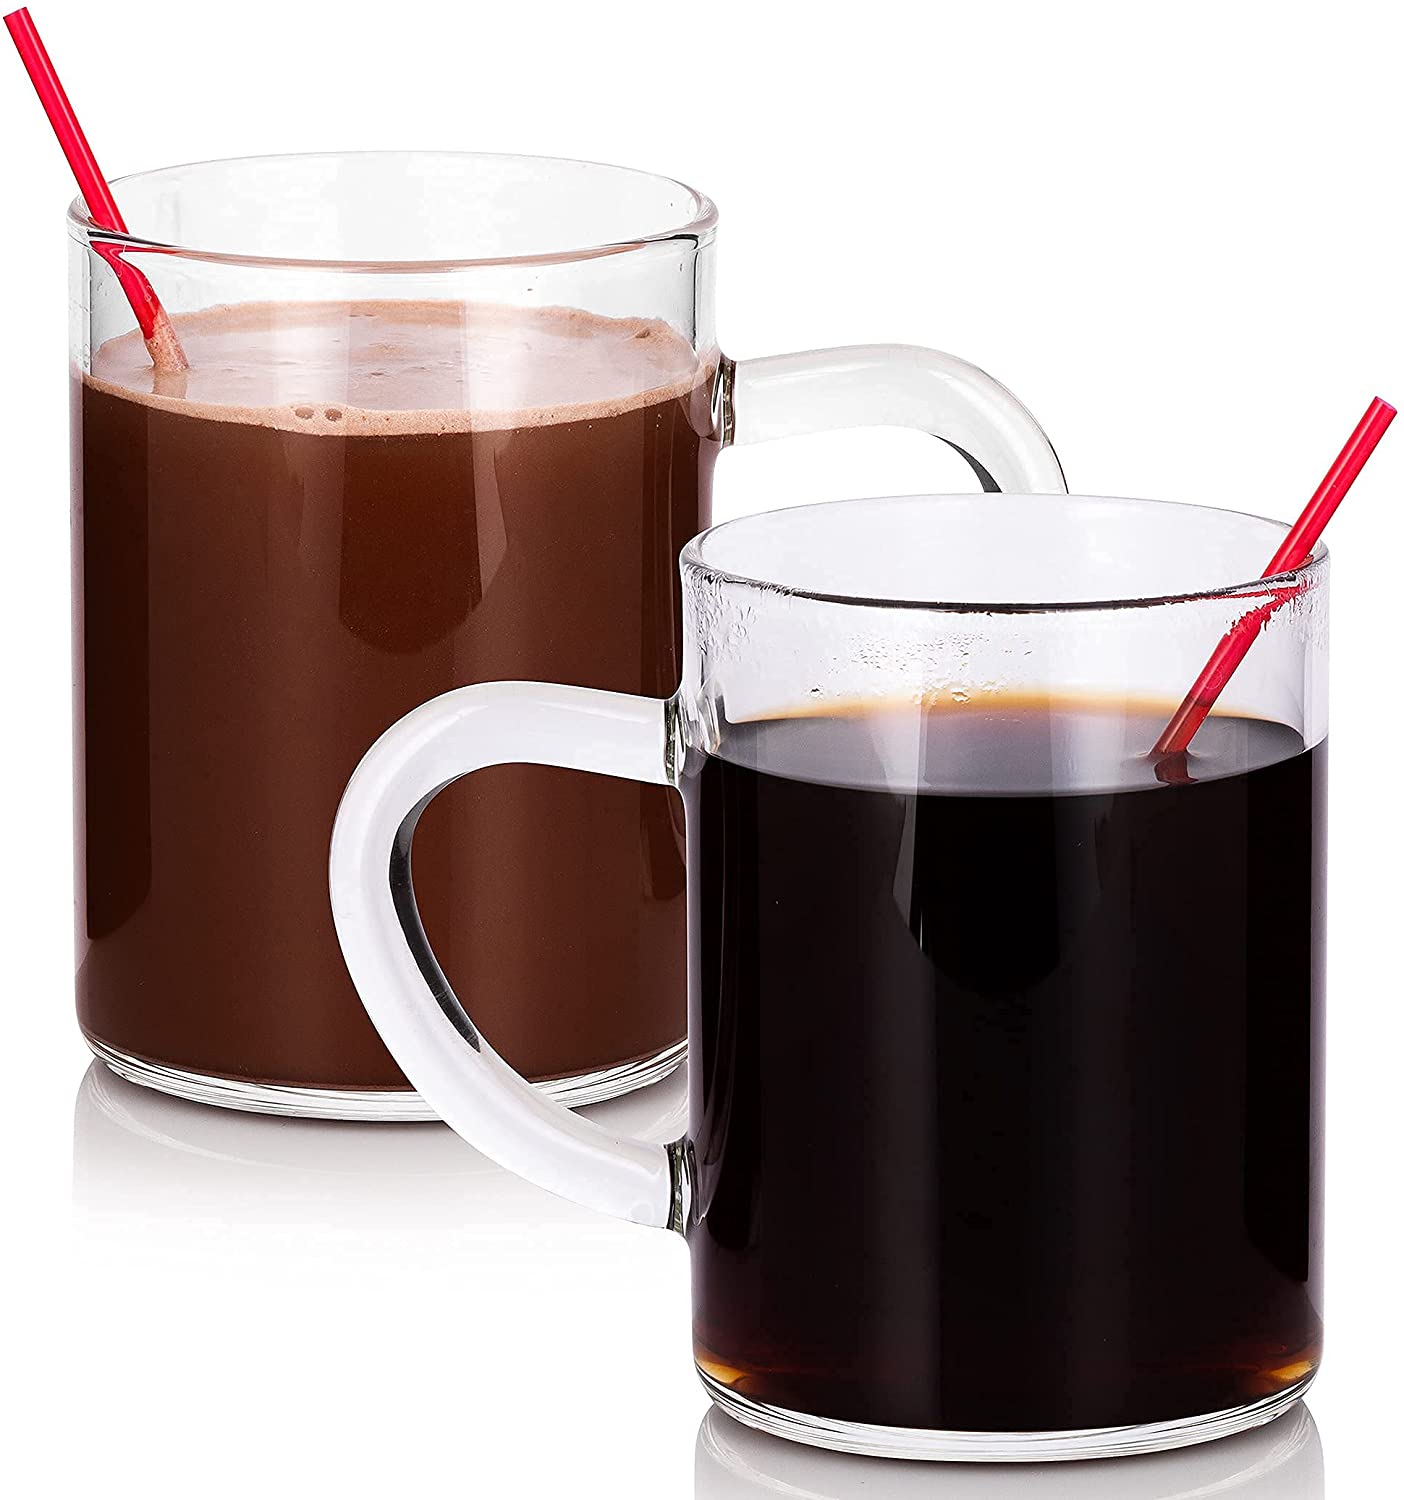 Borosilicate Glass Coffee Mug With Color Handle - Buy Wide Mouth Mocha Hot  Beverage Mugs,Borosilicate Glass Cups With Color Handle,Pyrex Glass Coffee